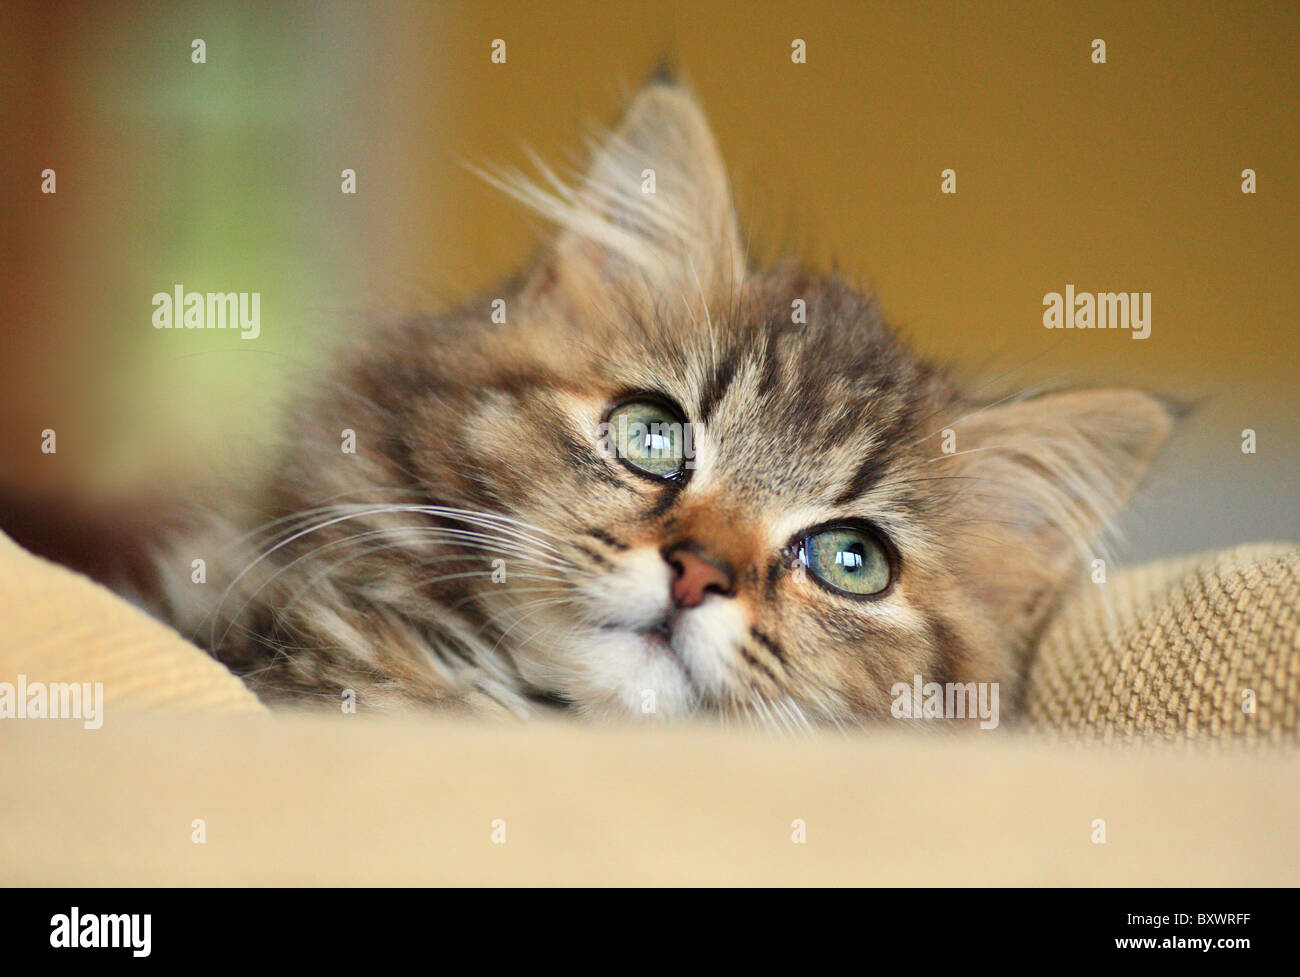 Cute long-haired tabby kitten. Stock Photo